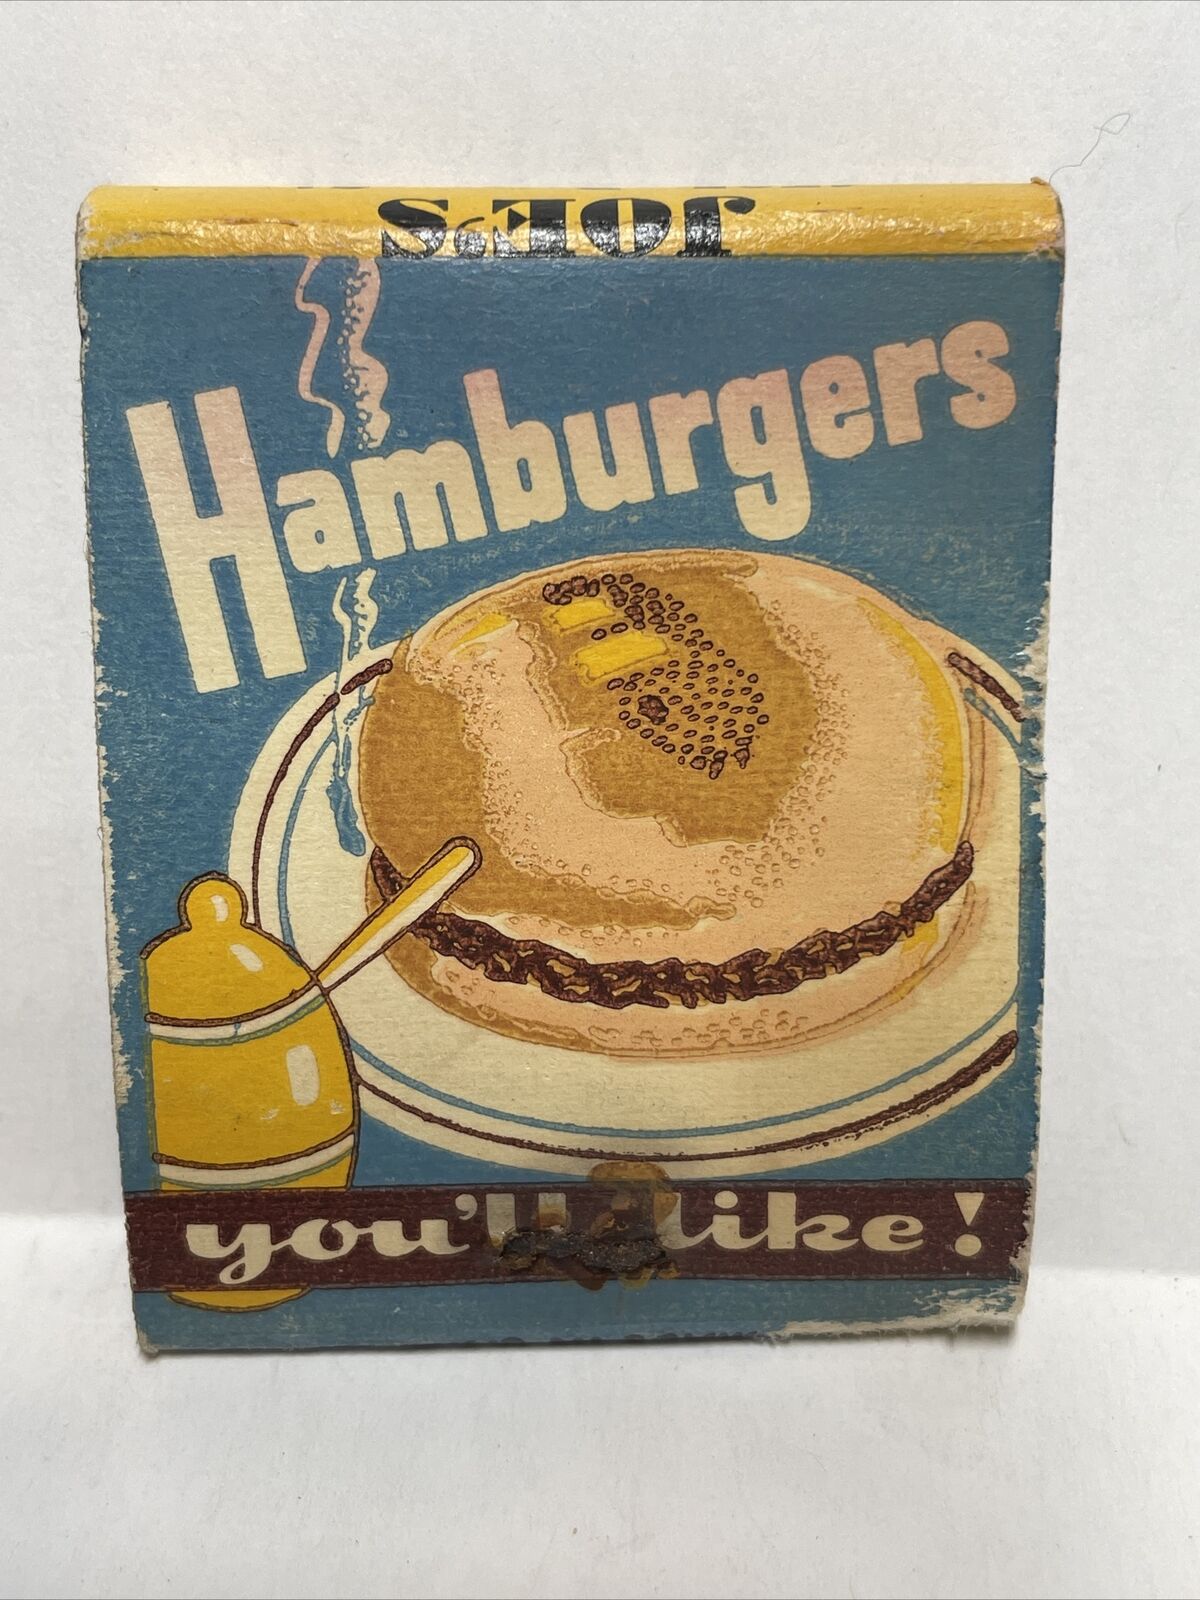 RARE Hamburgers You’ll Like Joe’s Restaurant Cafe Diner 40s-50s UNSTRUCK